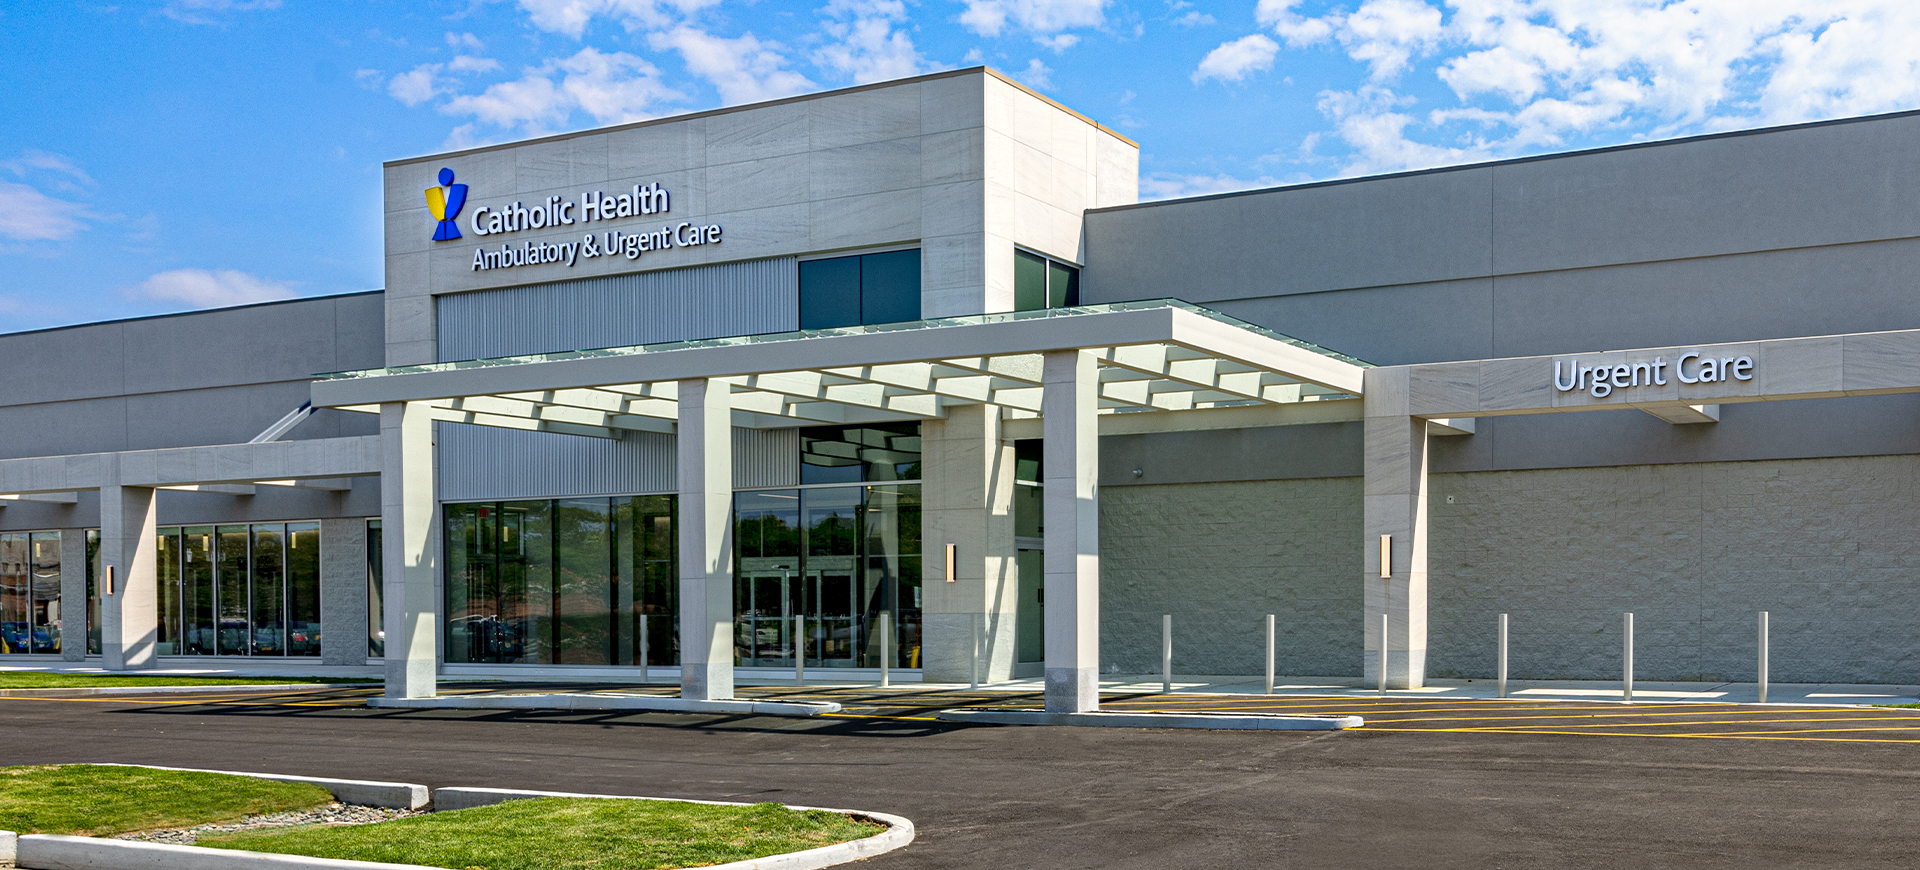       	        
	  	  Catholic Health Urgent Care at Centereach
	  	  
	        